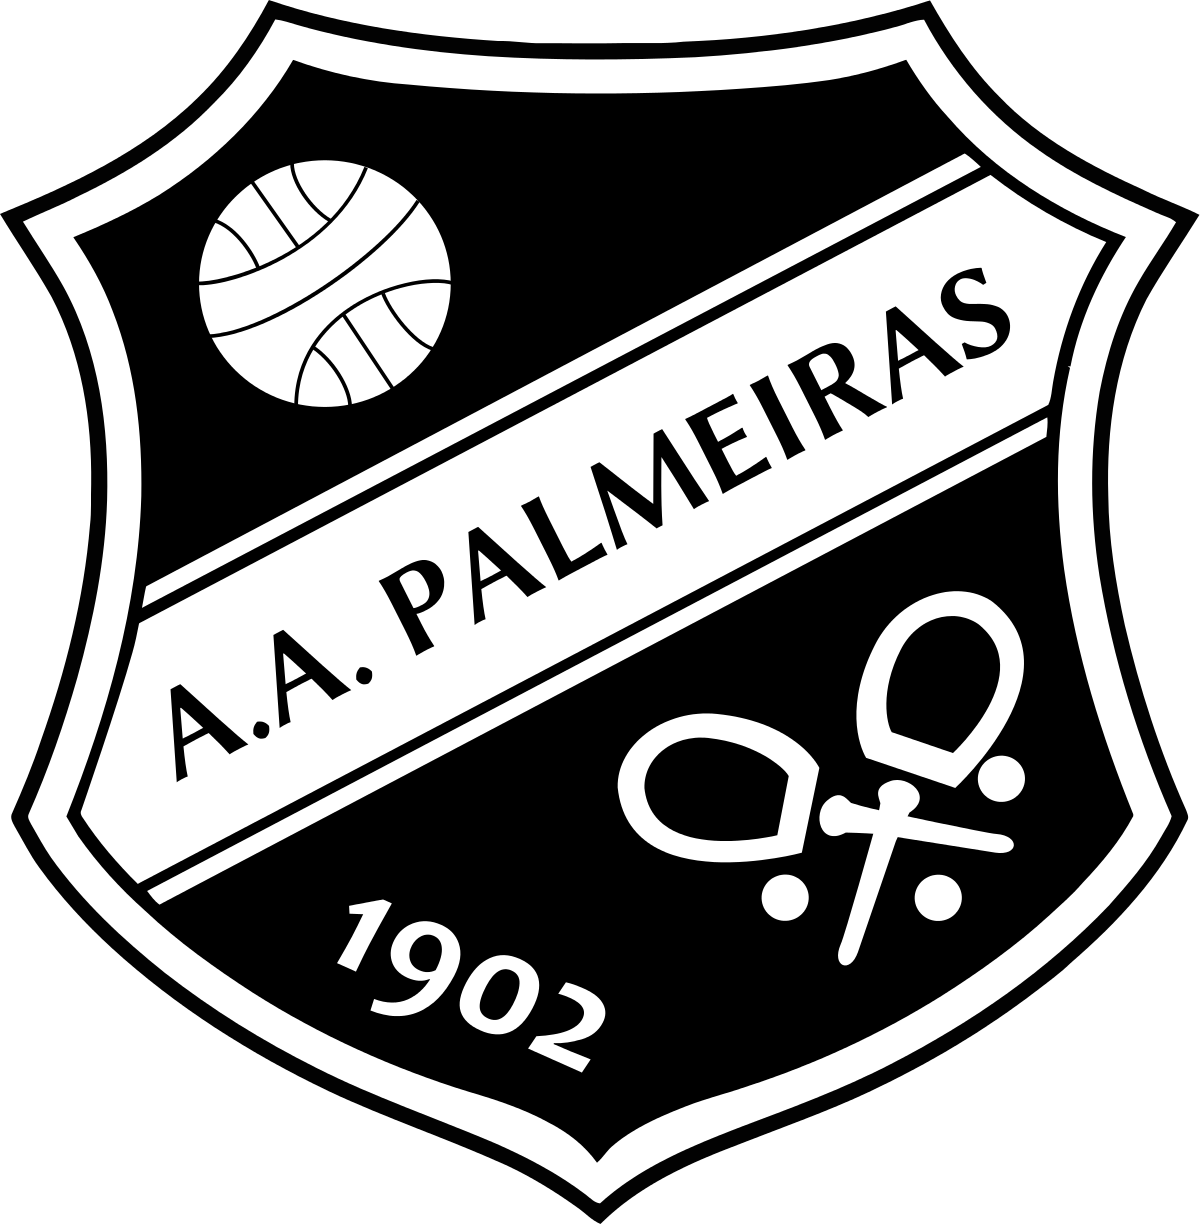 File:Palmeiras-sao-paulo-final-paulista-abr2022-3.png - Wikimedia Commons